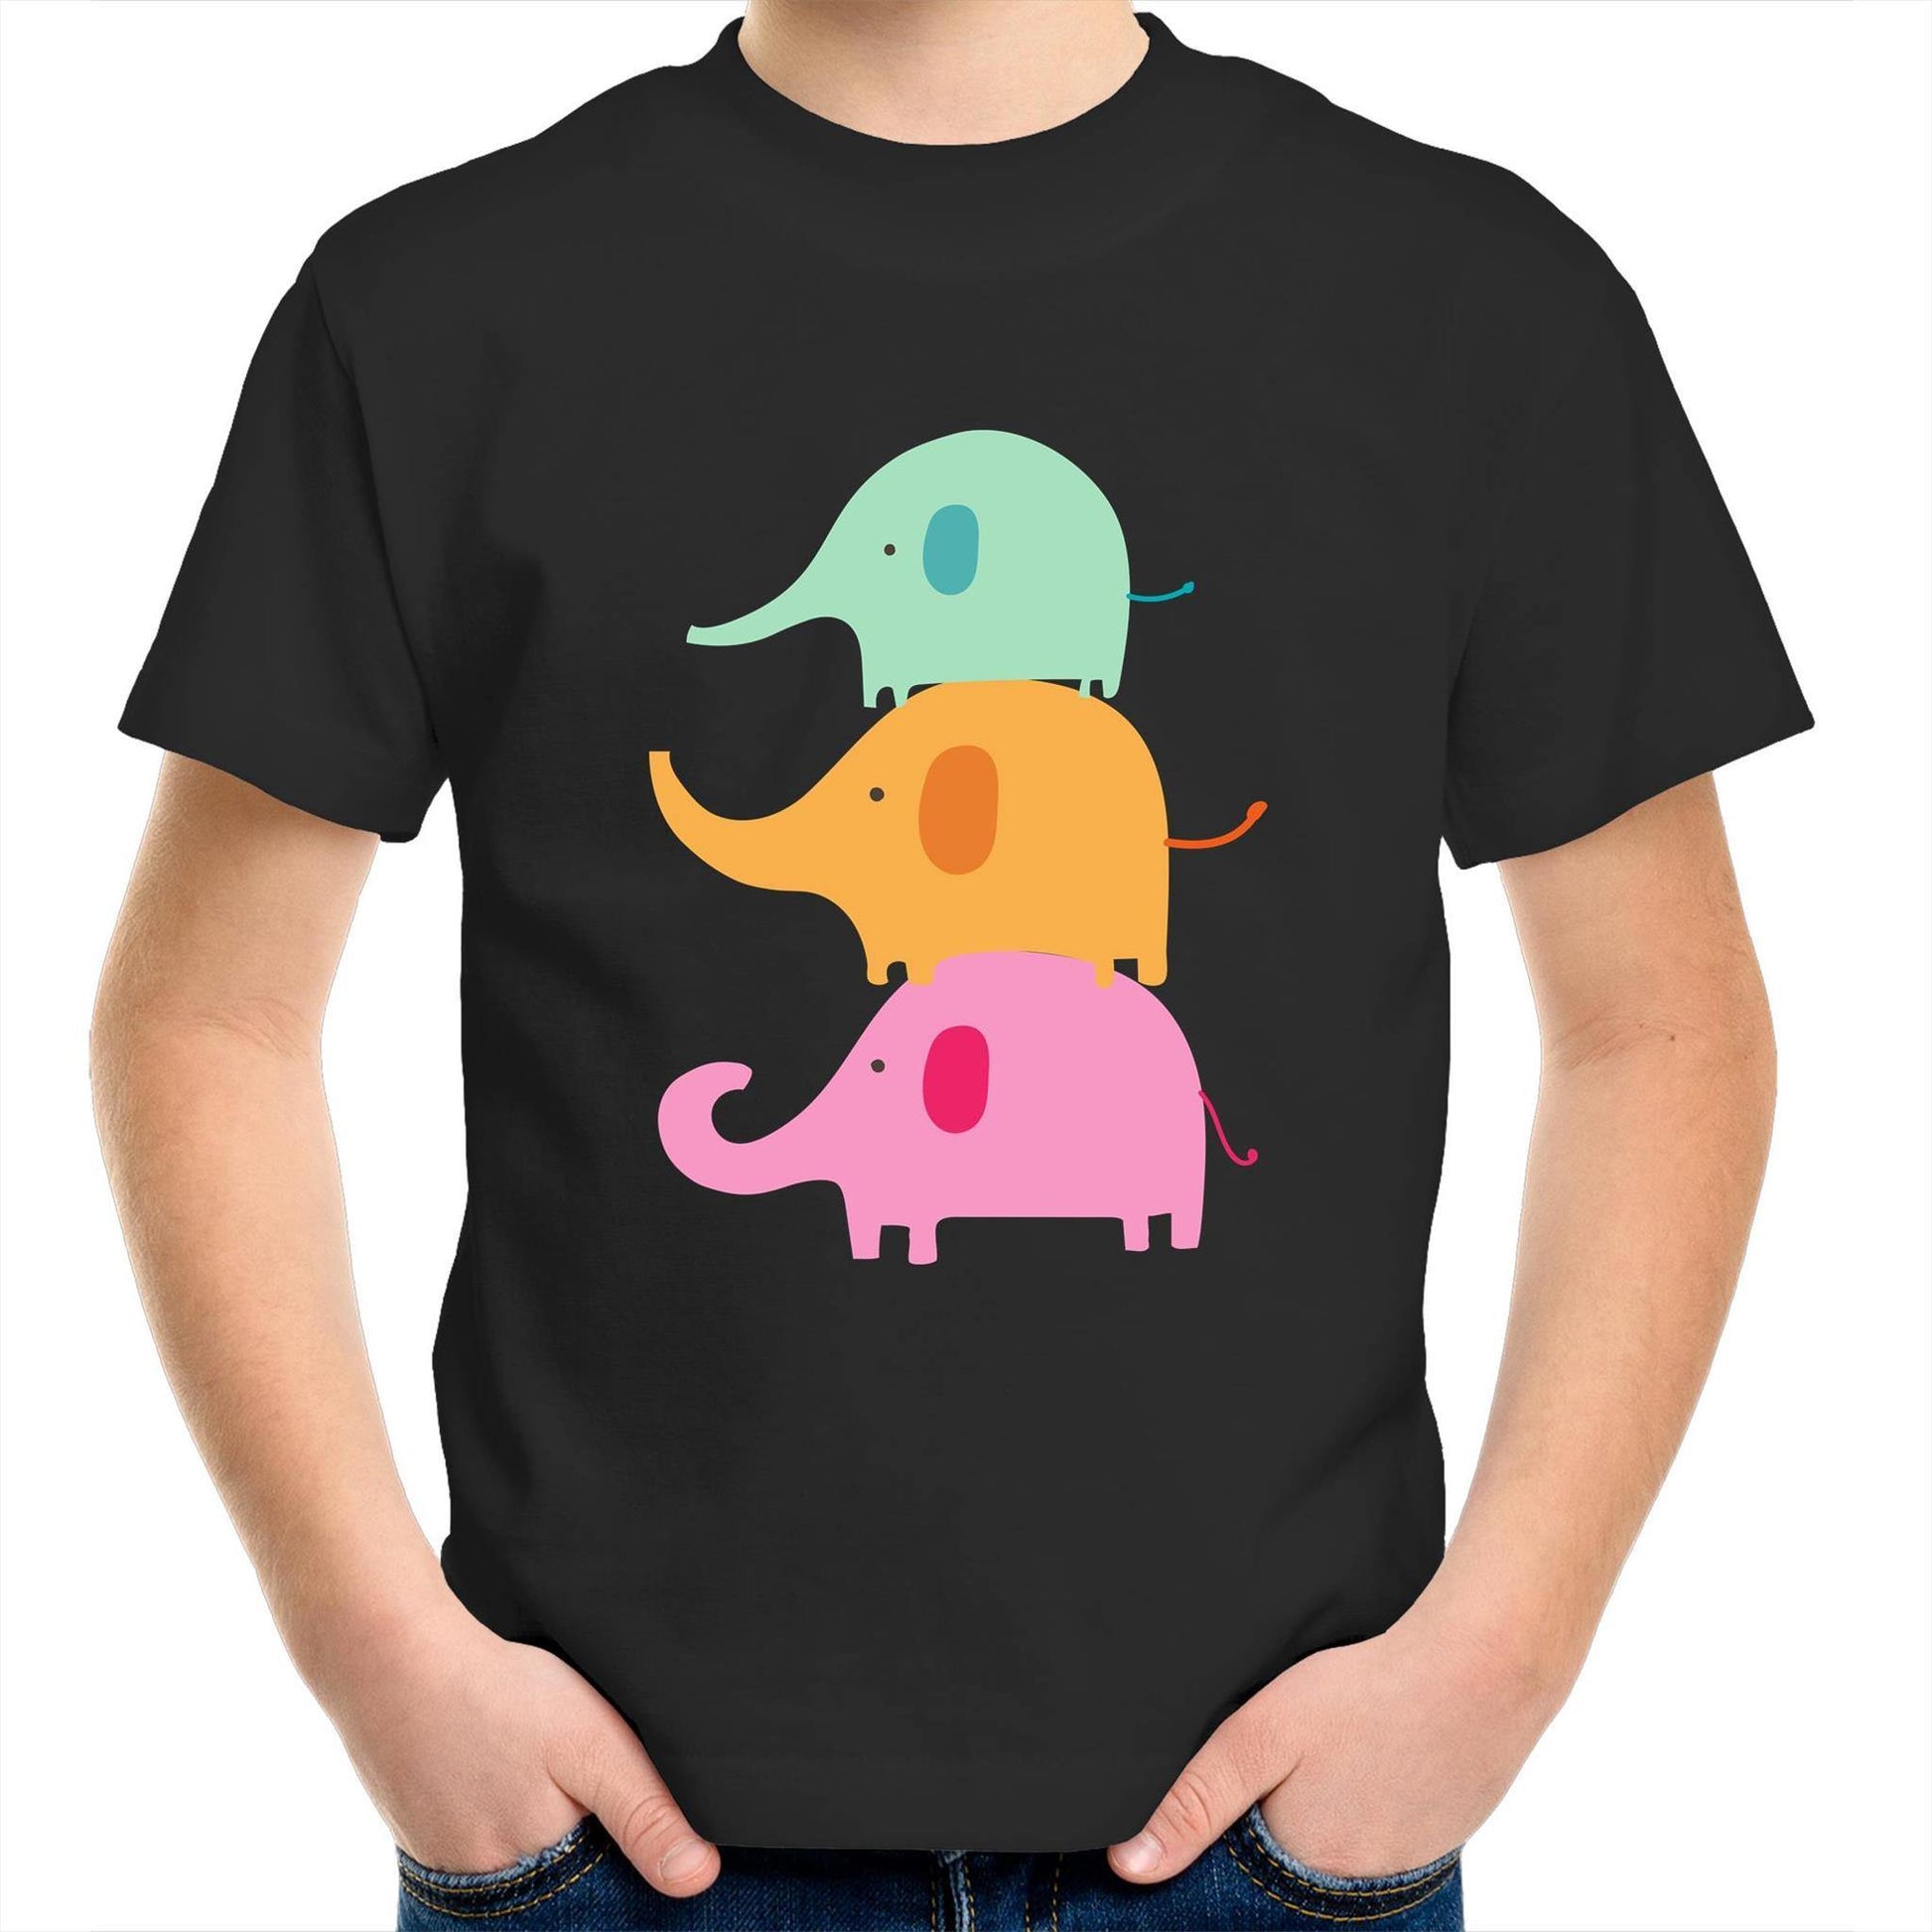 Three Cute Elephants - Kids Youth Crew T-Shirt Black Kids Youth T-shirt animal